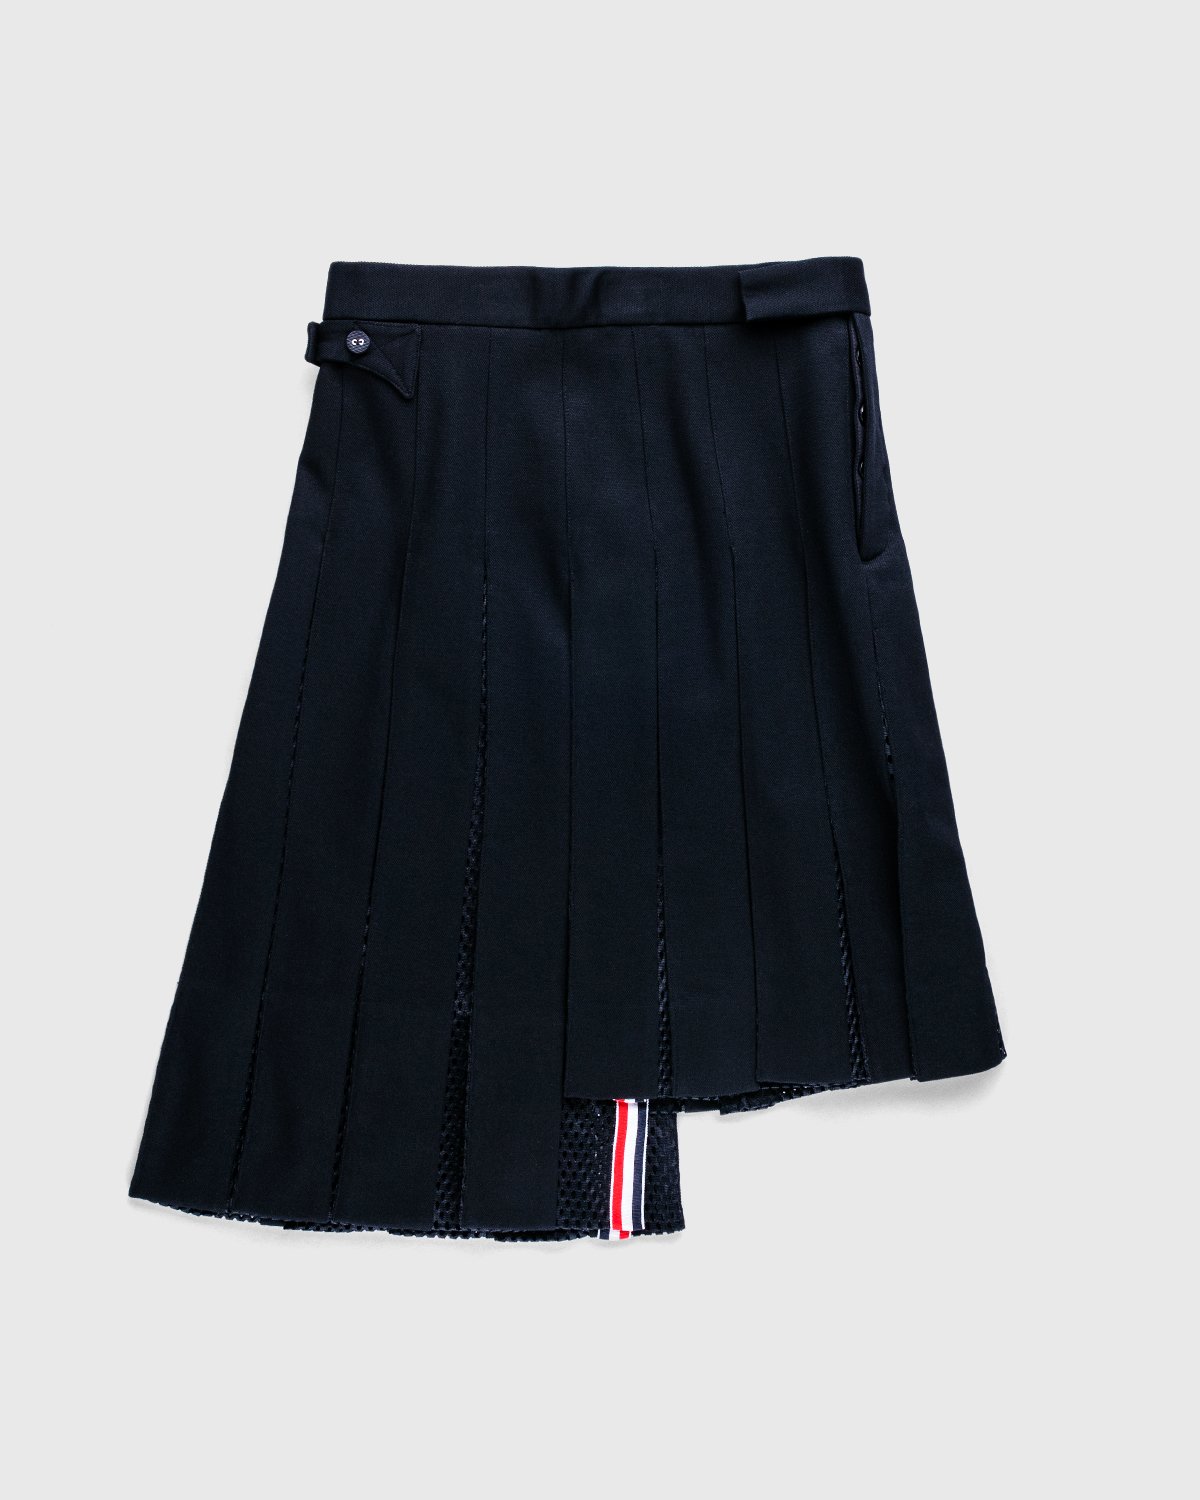 Thom Browne x Highsnobiety - Women’s Pleated Mesh Skirt Black - Clothing - Black - Image 3